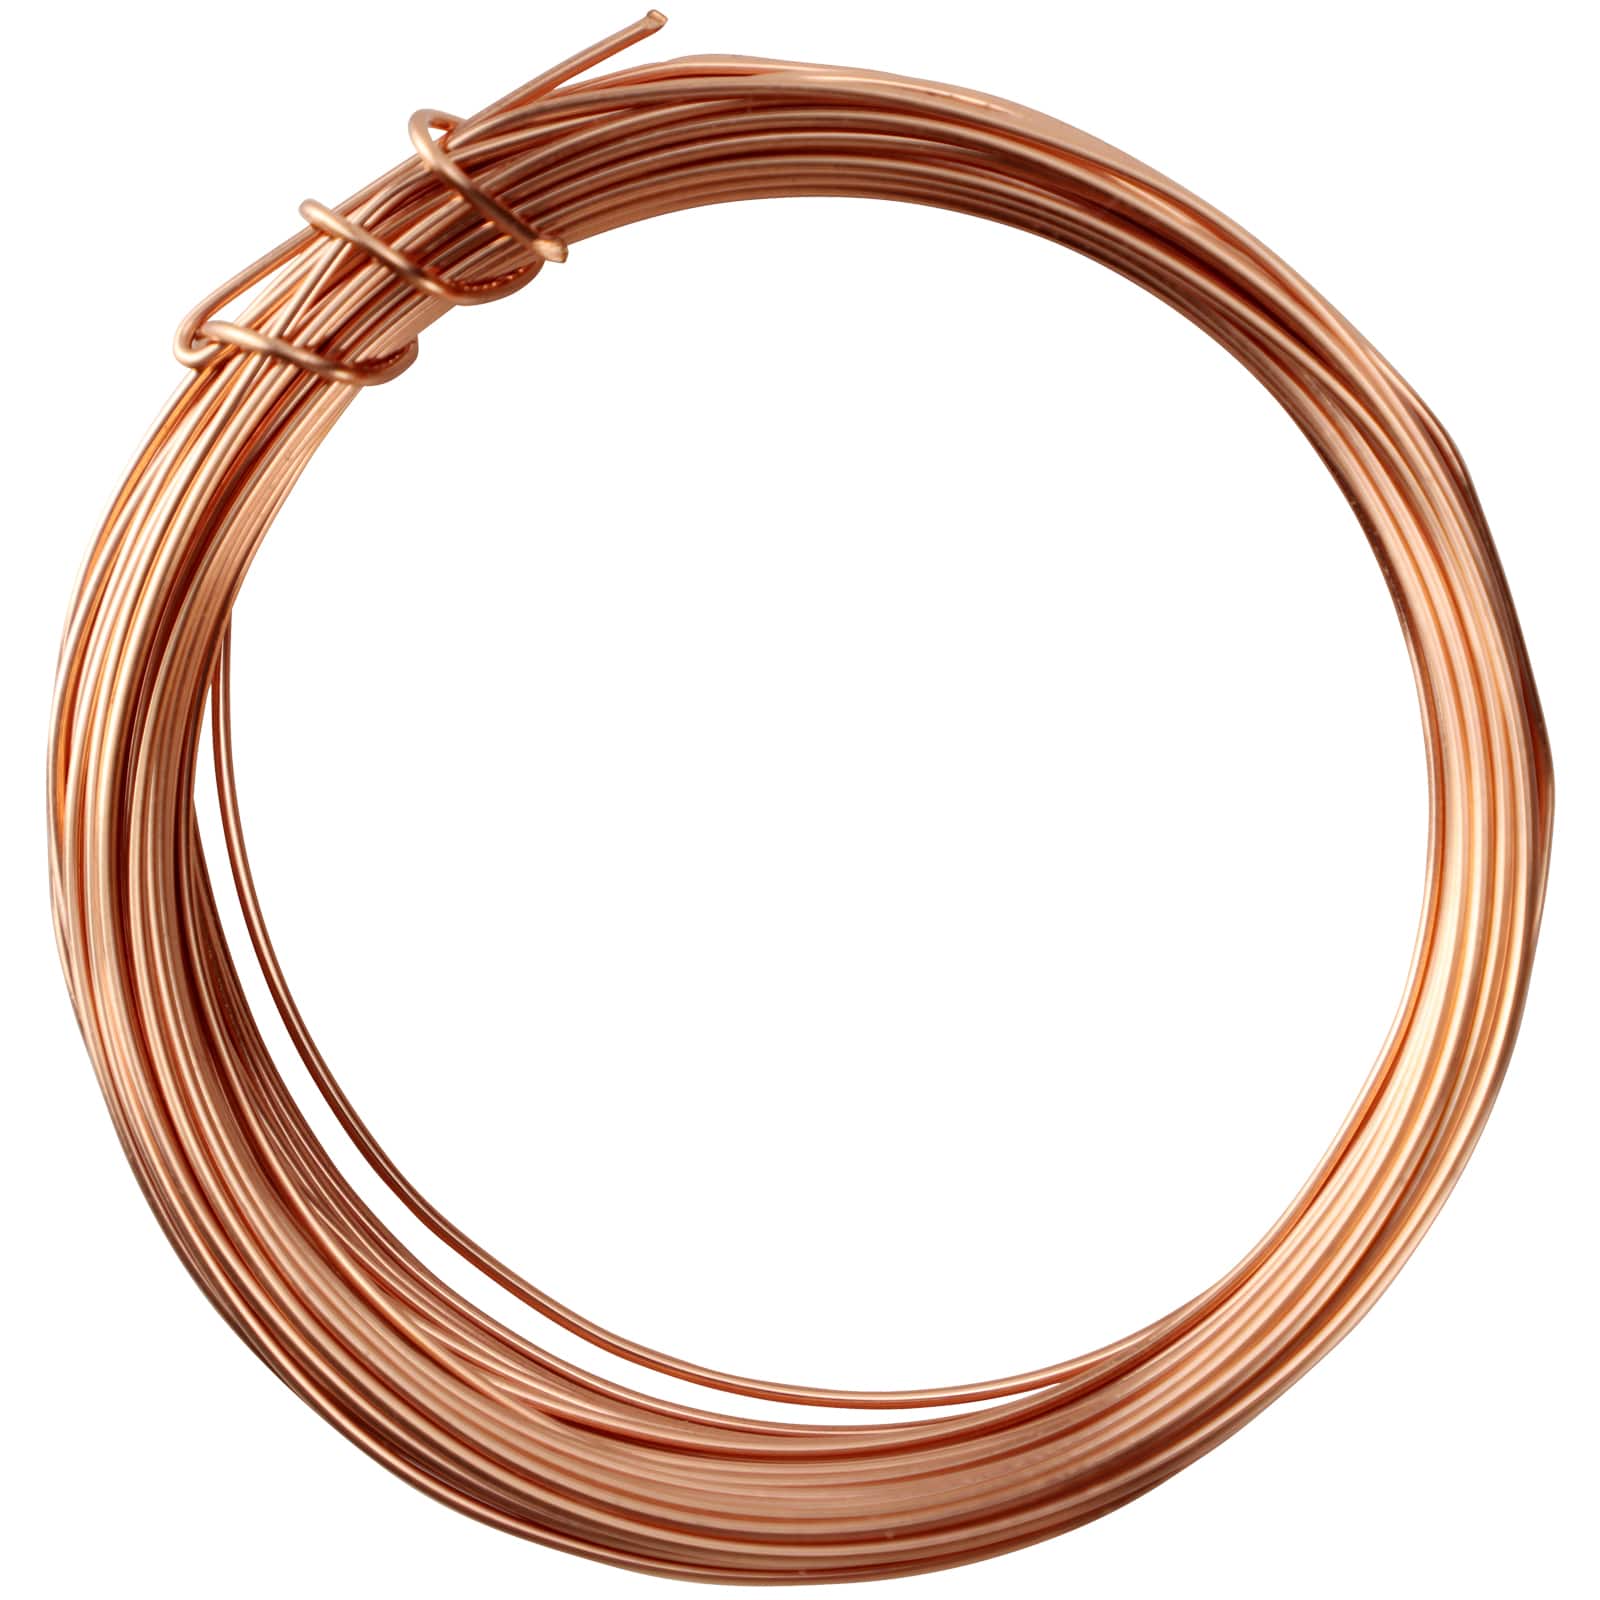 OOK 50 ft. L Copper 20 Ga. Wire - Ace Hardware